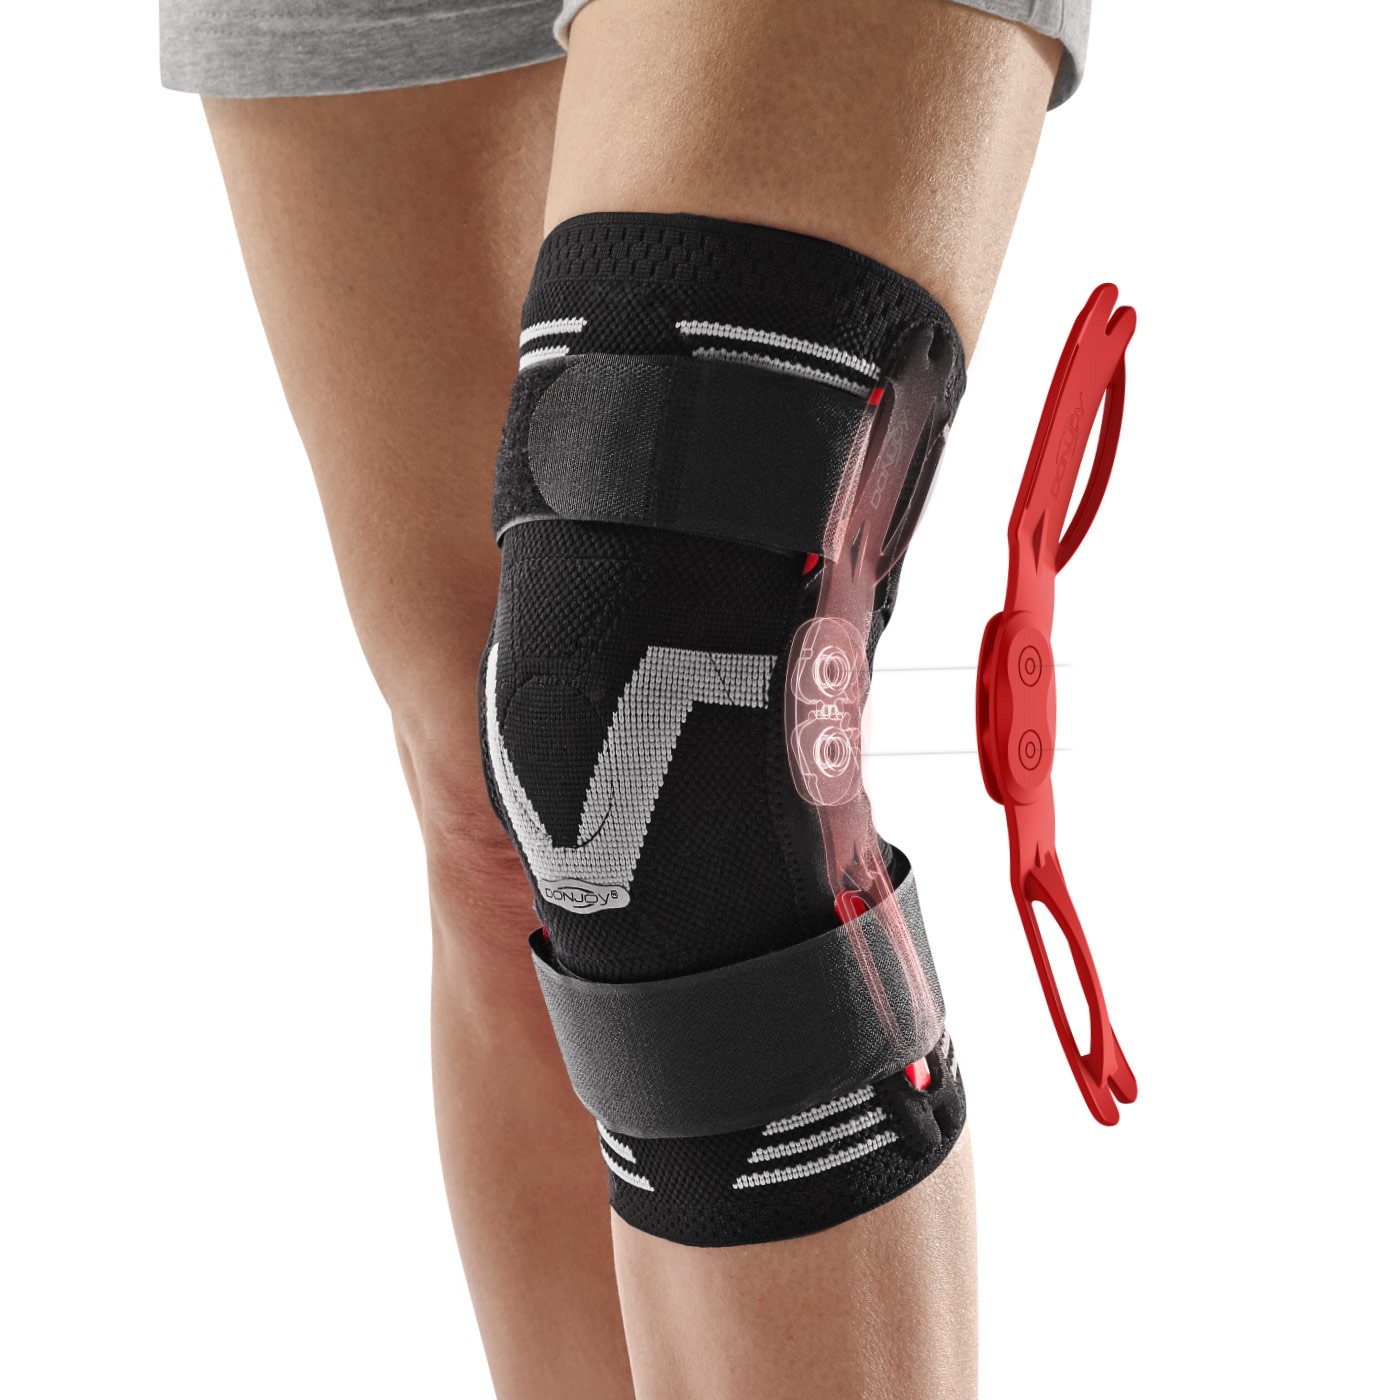 New Stabilax Elastic Hinged Knee Support